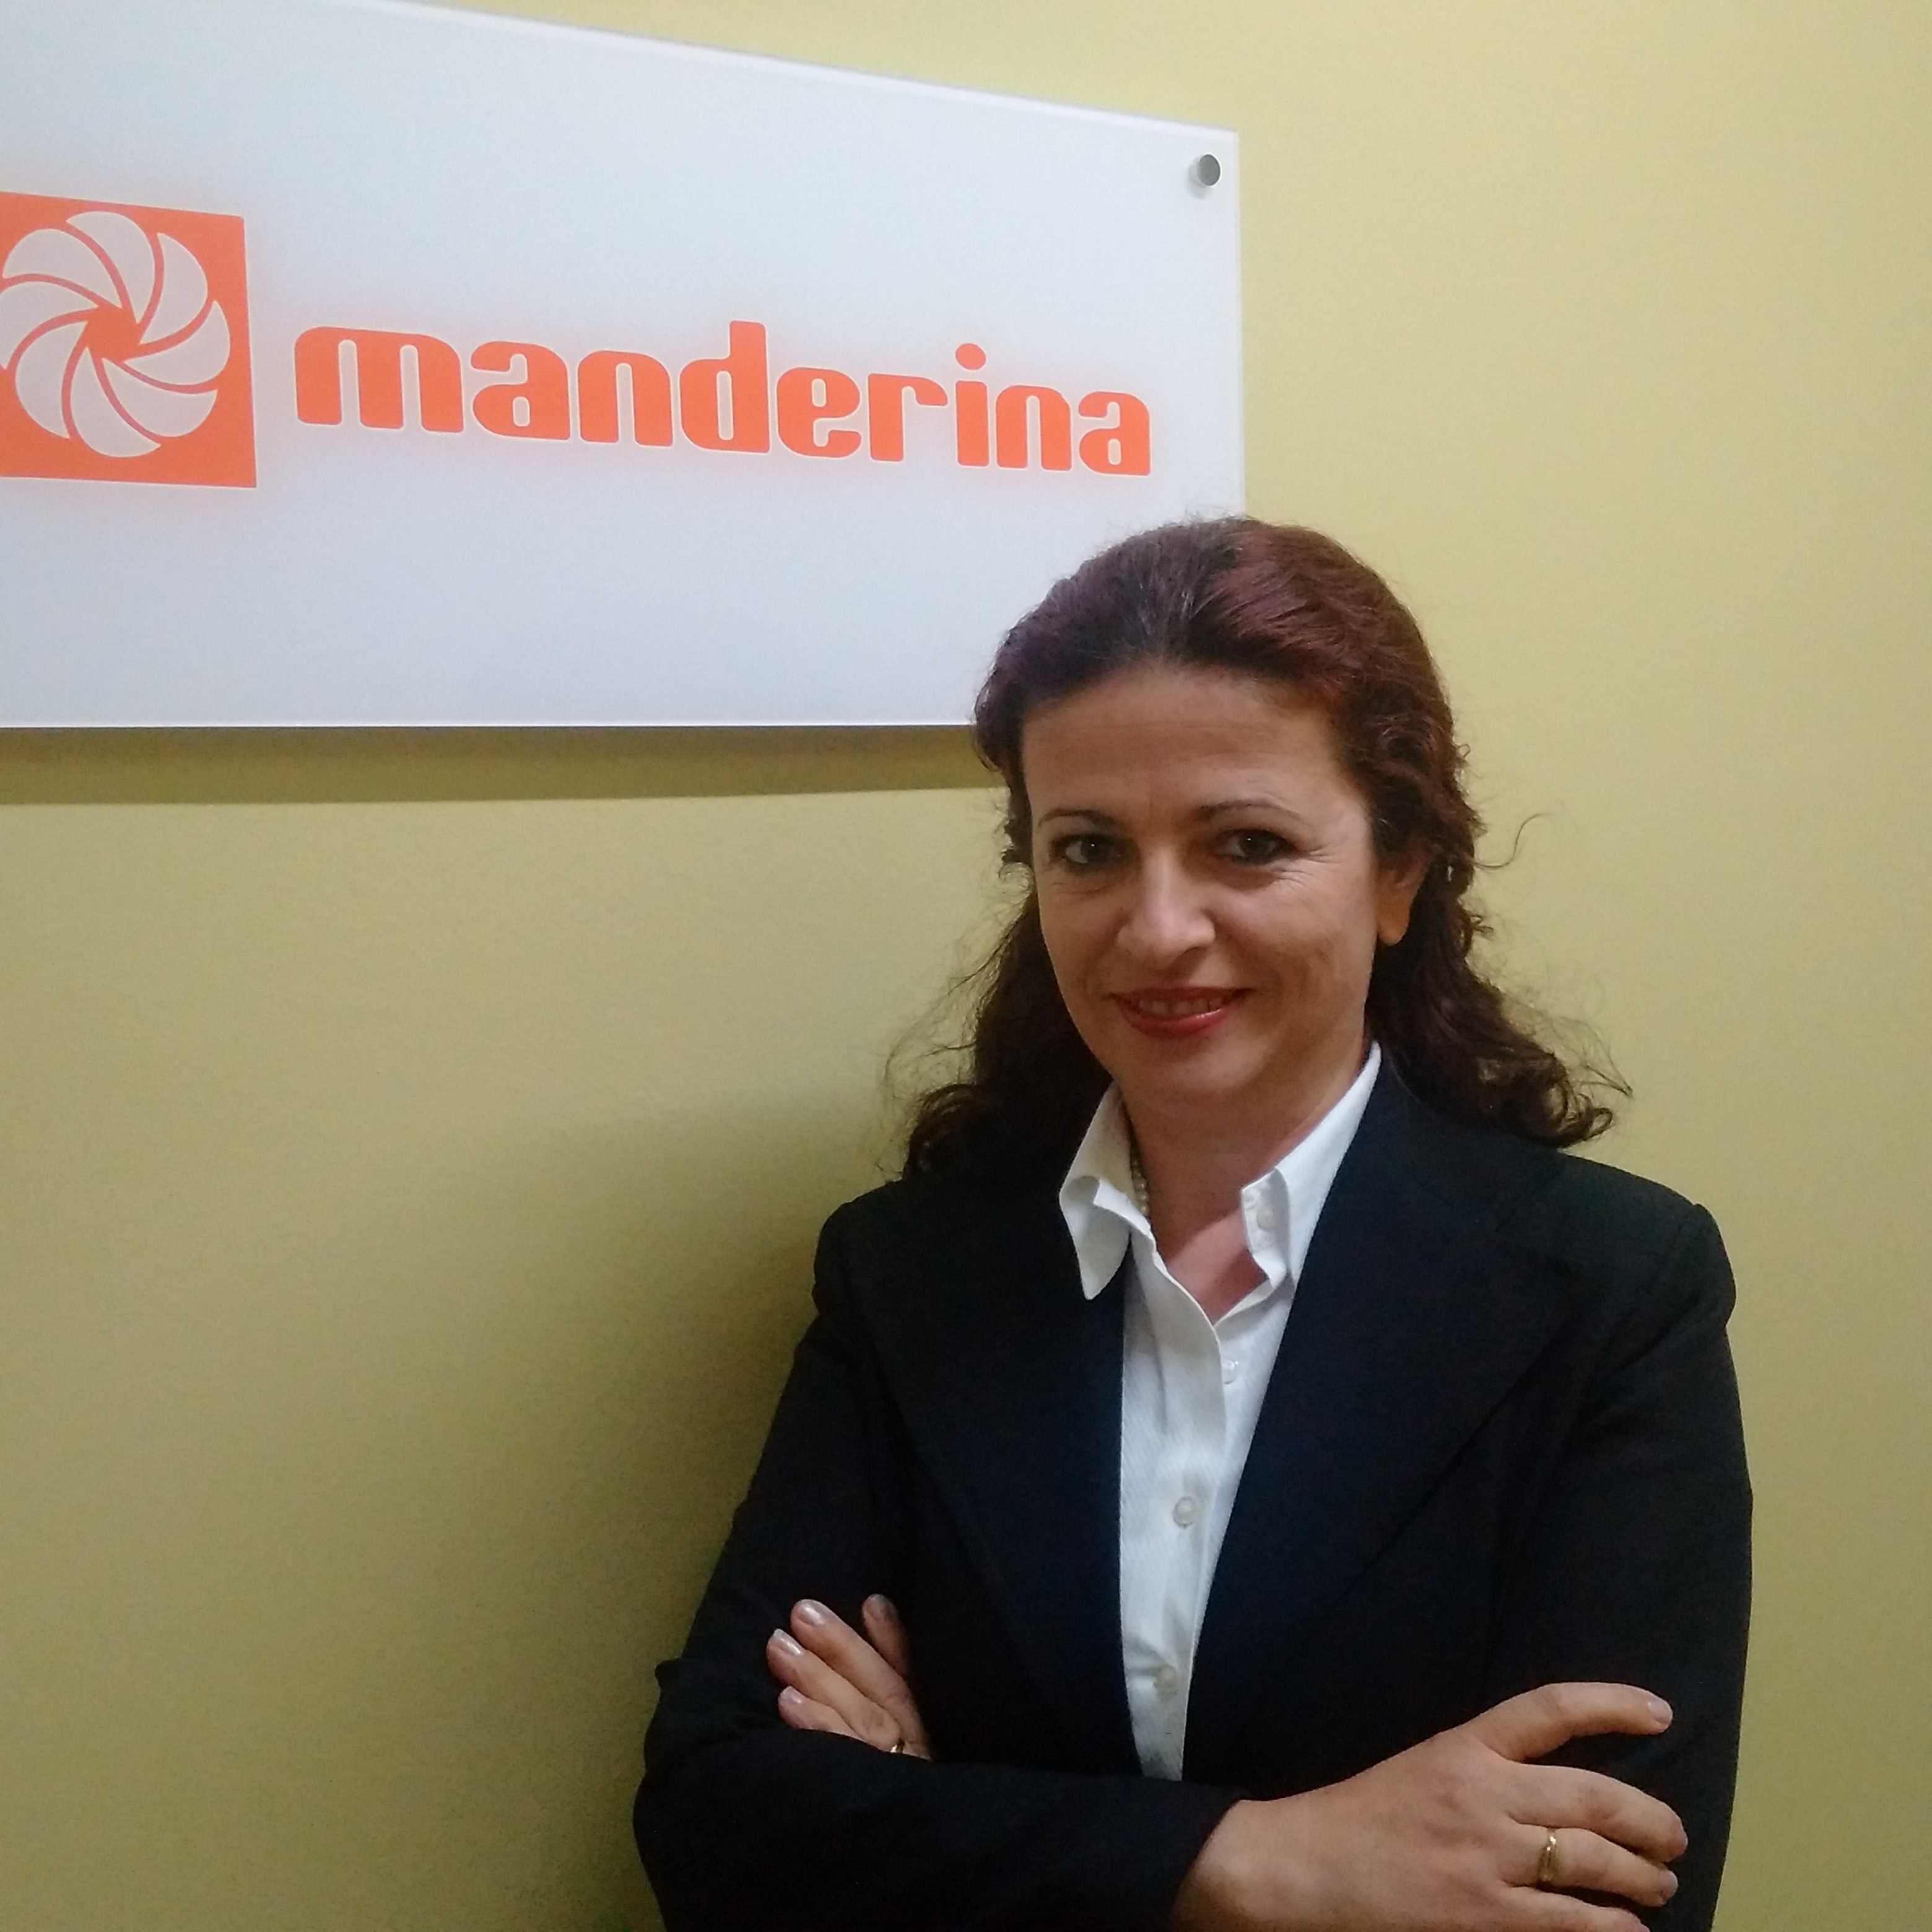 Alma Gerxhani, the founder of Manderina Marketing at her office in Tirana